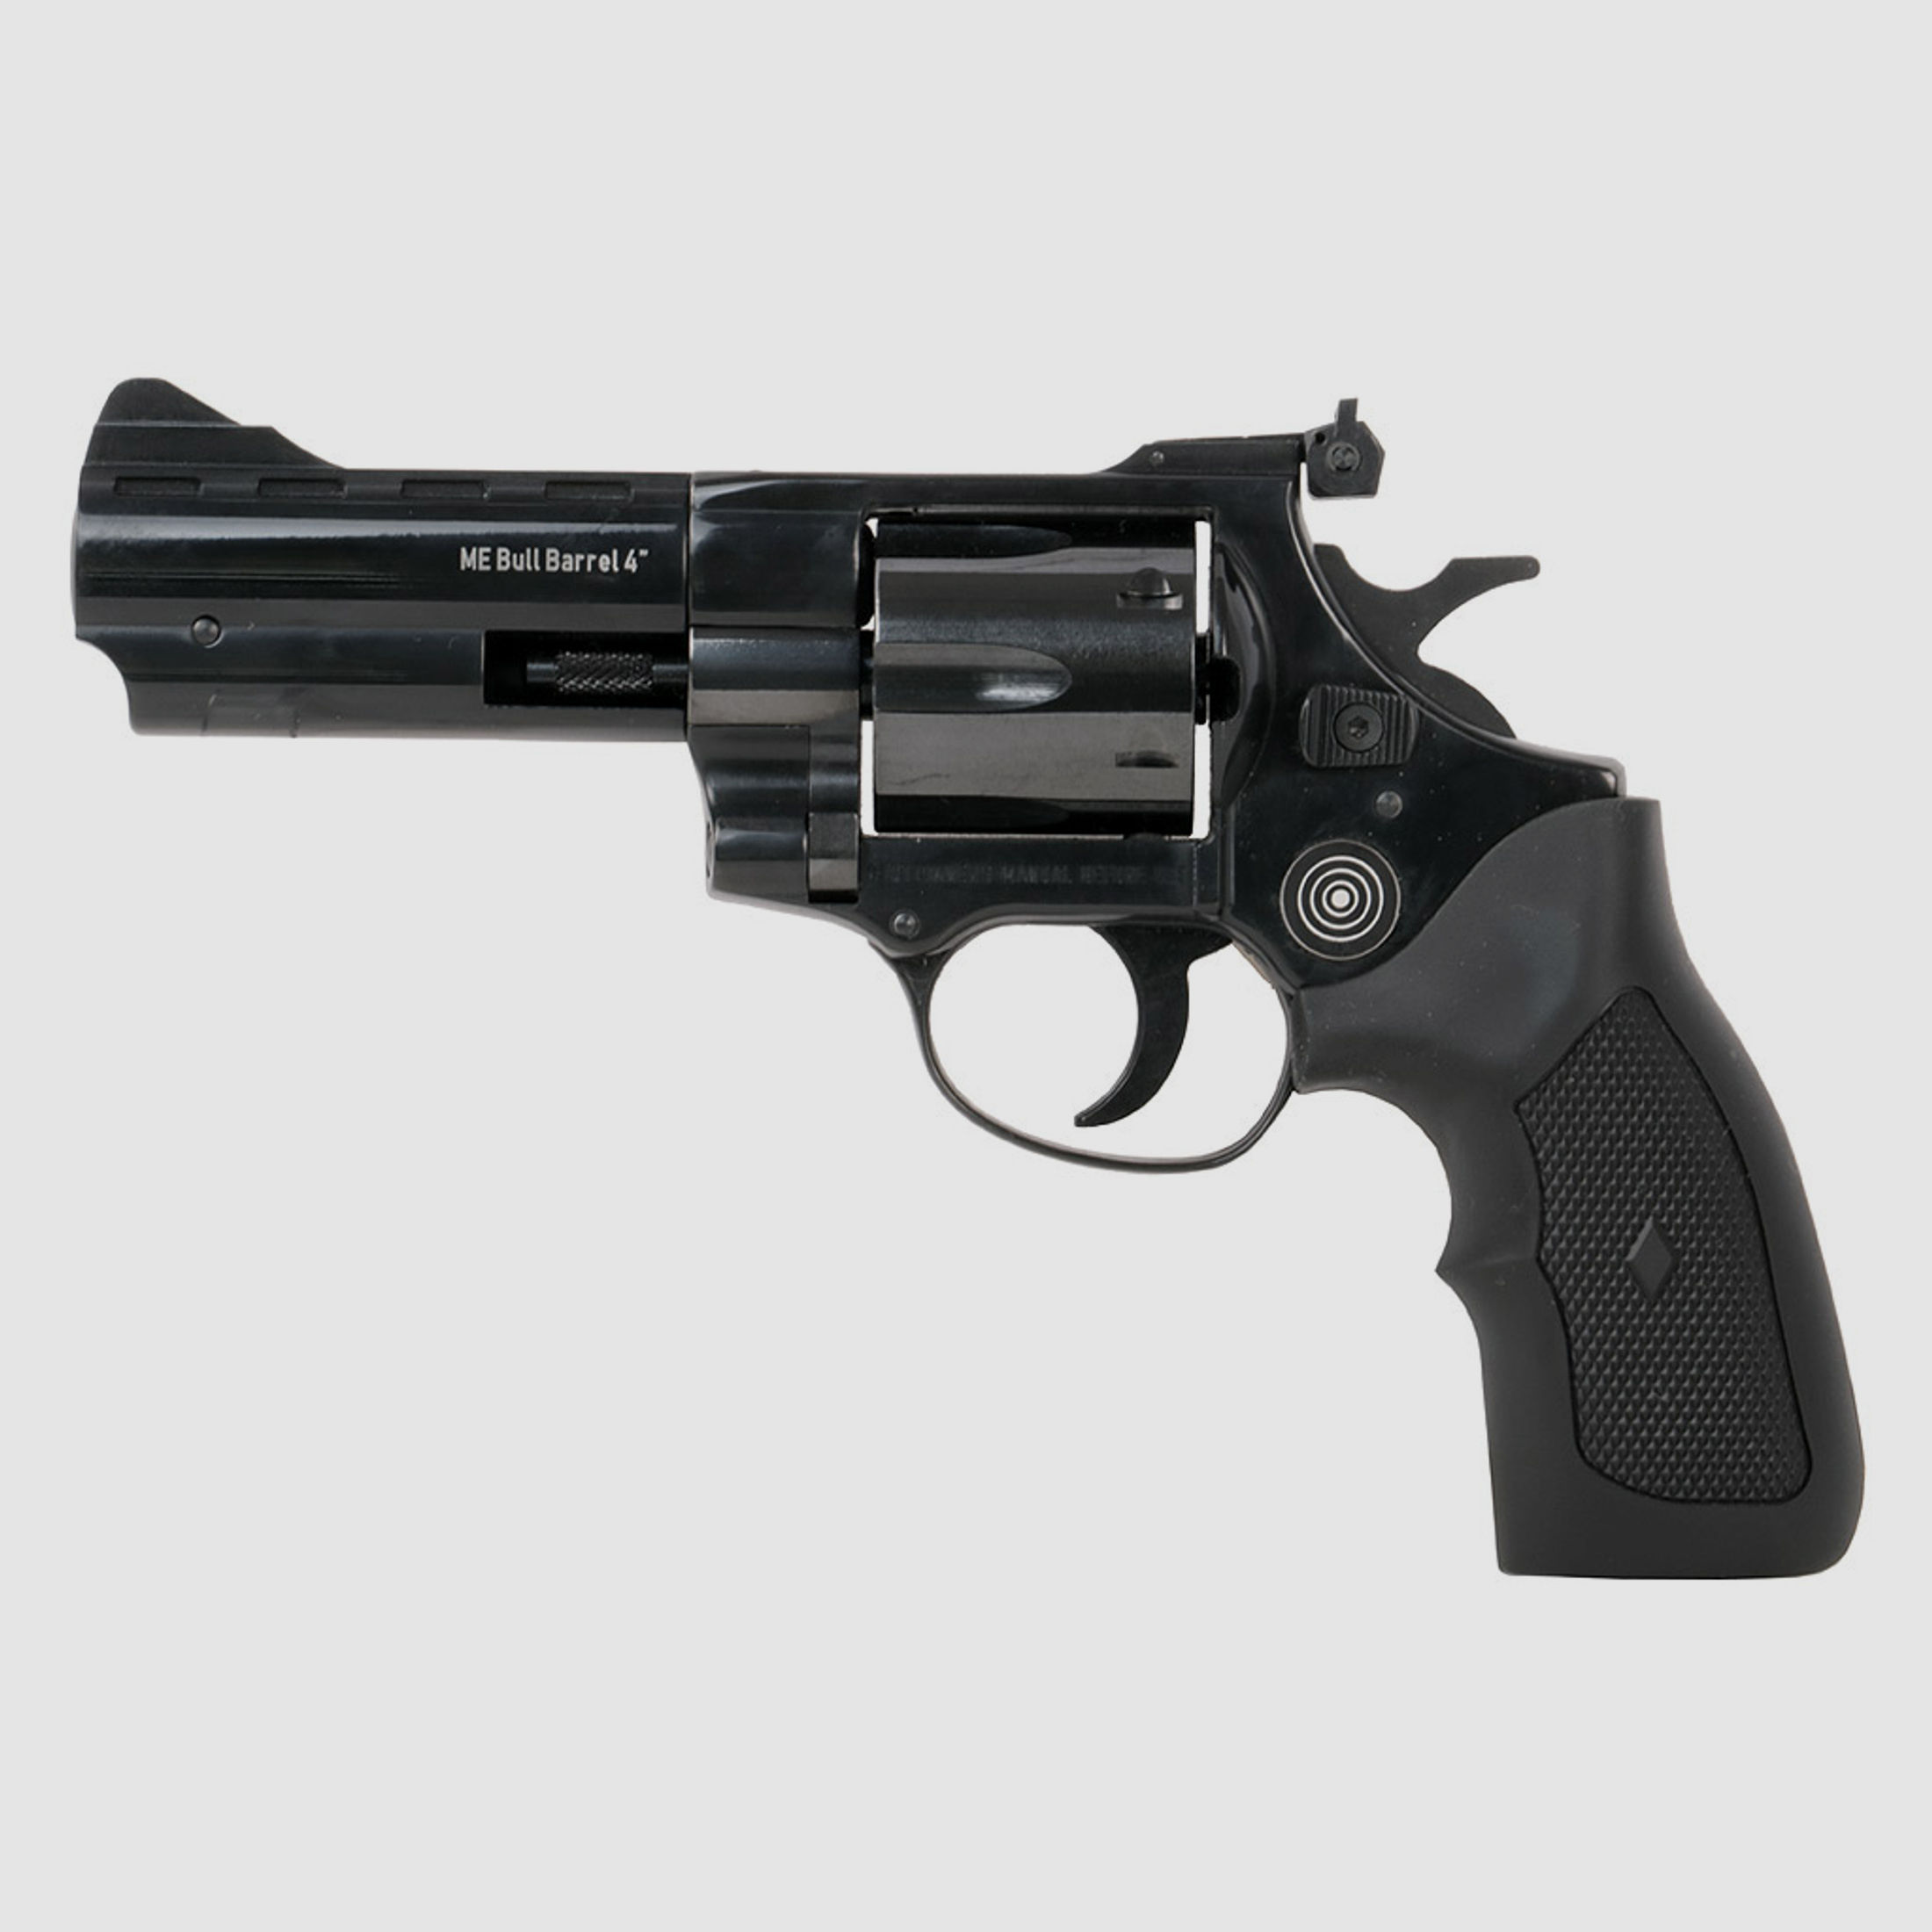 LEP Druckluft Revolver ME Bull Barrel 4 Zoll brĂĽniert Kaliber 5,5 mm (P18)